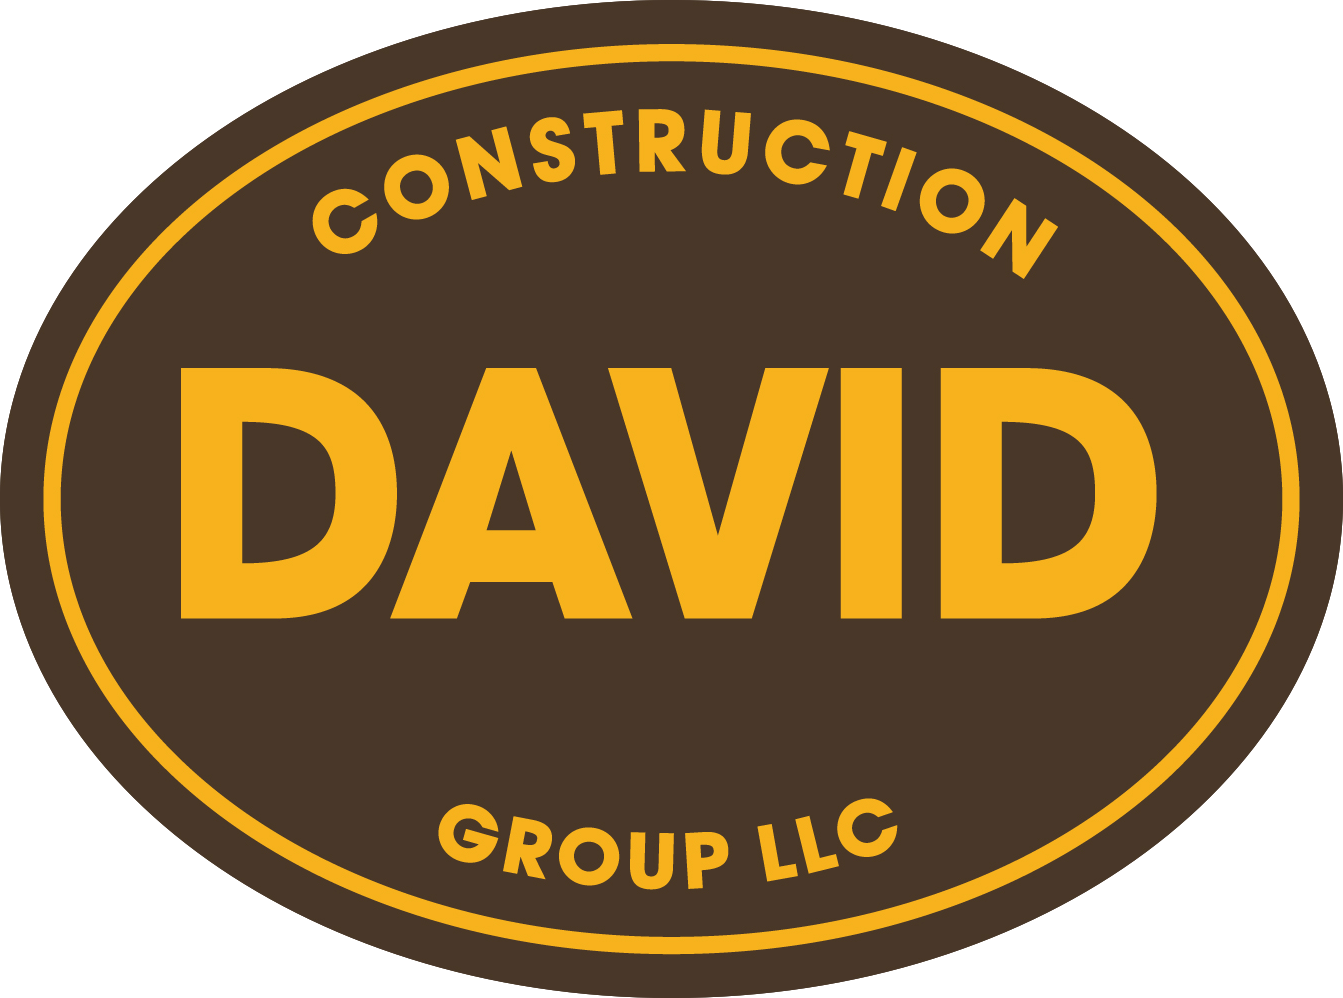 David Construction Group LLC